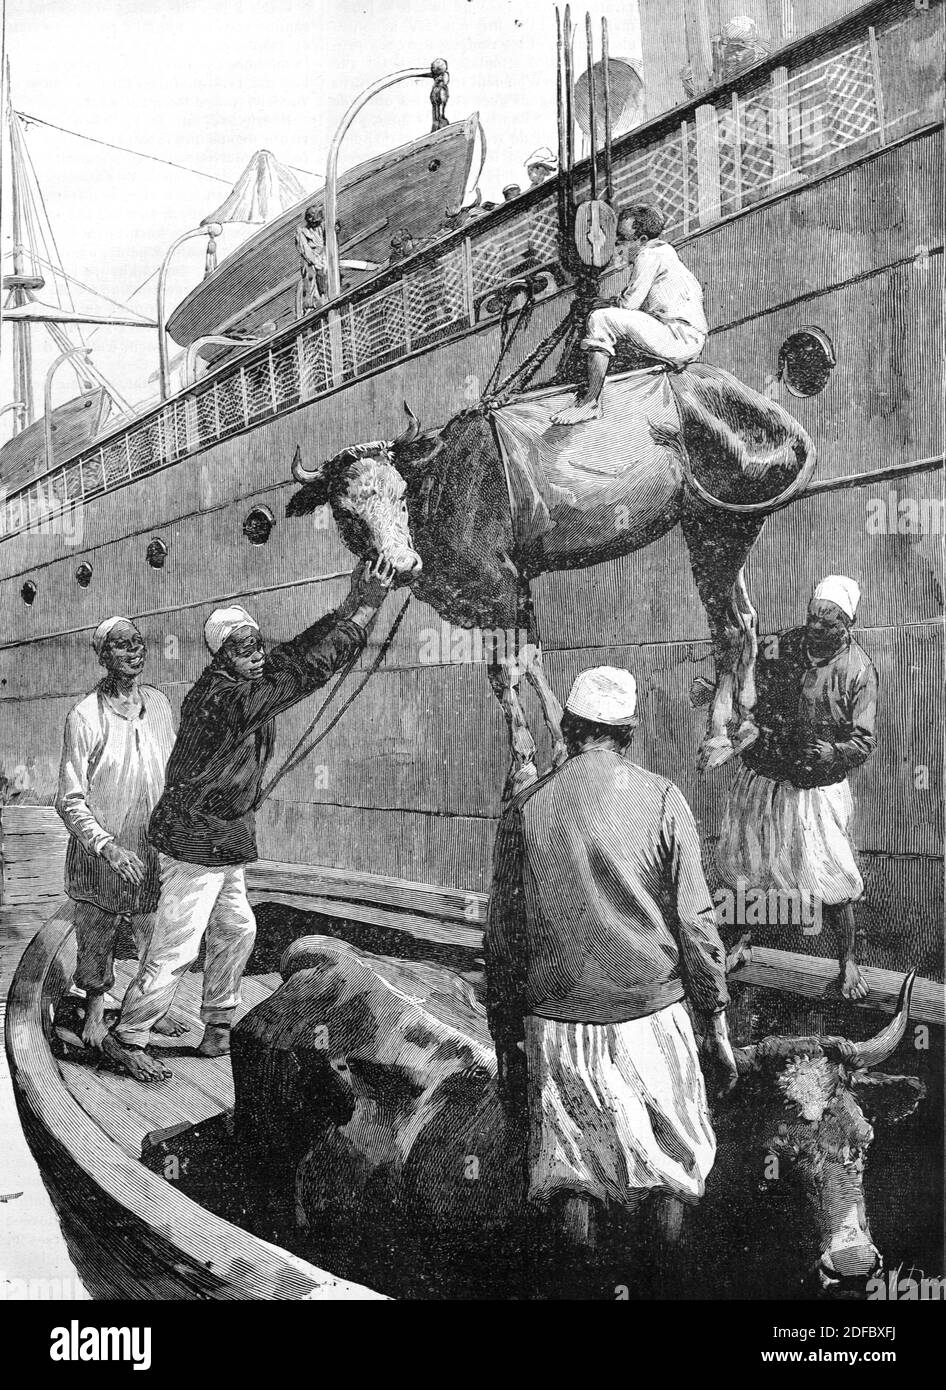 Loading Zebu Cattle onto Ship for Export to France Madagascar (Engr 1895) Vintage Engraving or Illustration Stock Photo